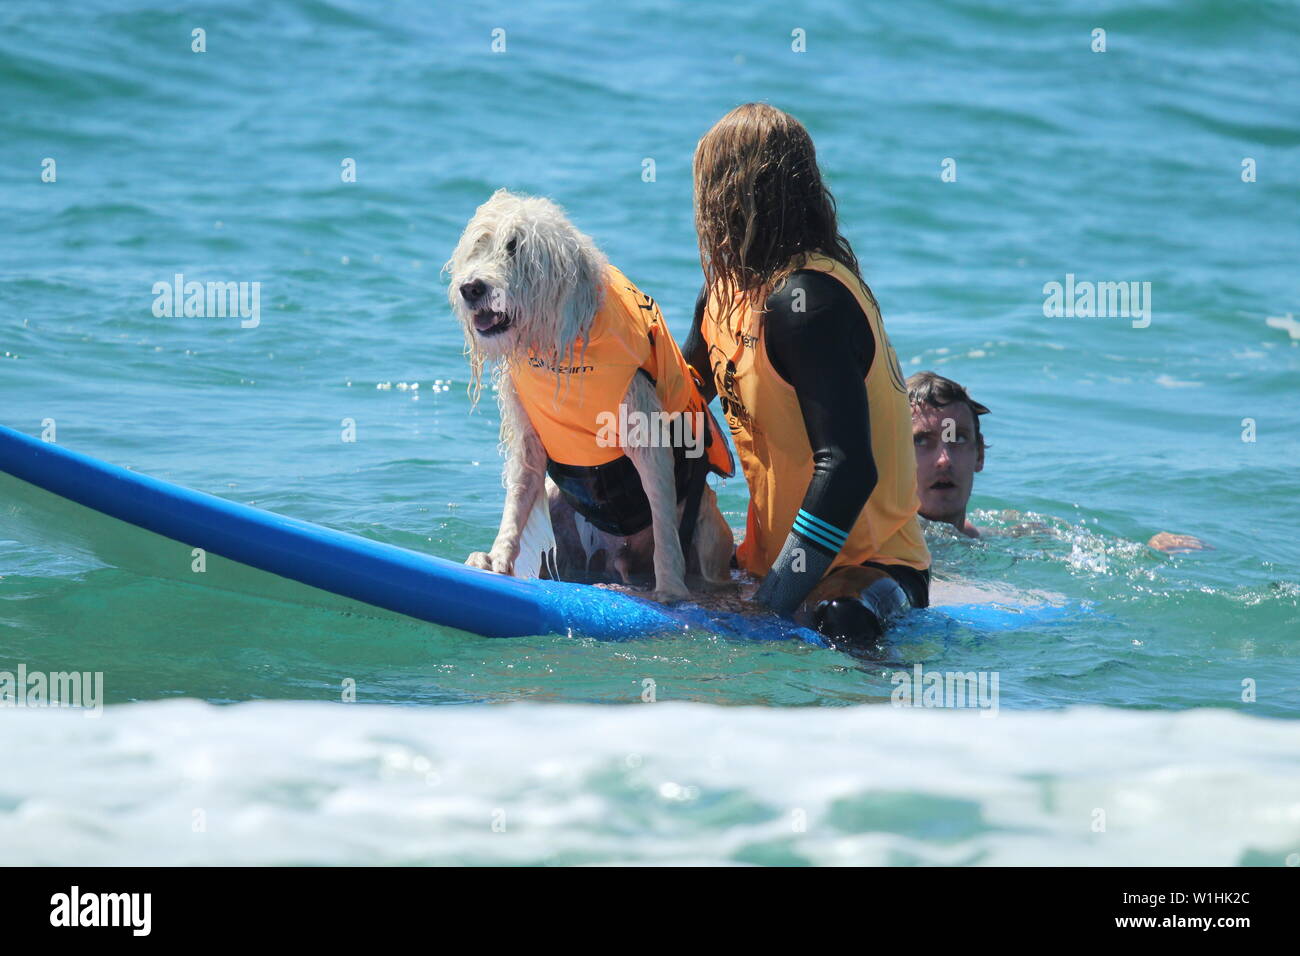 Dog surfing event in Huntington Beach, California Stock Photo Alamy